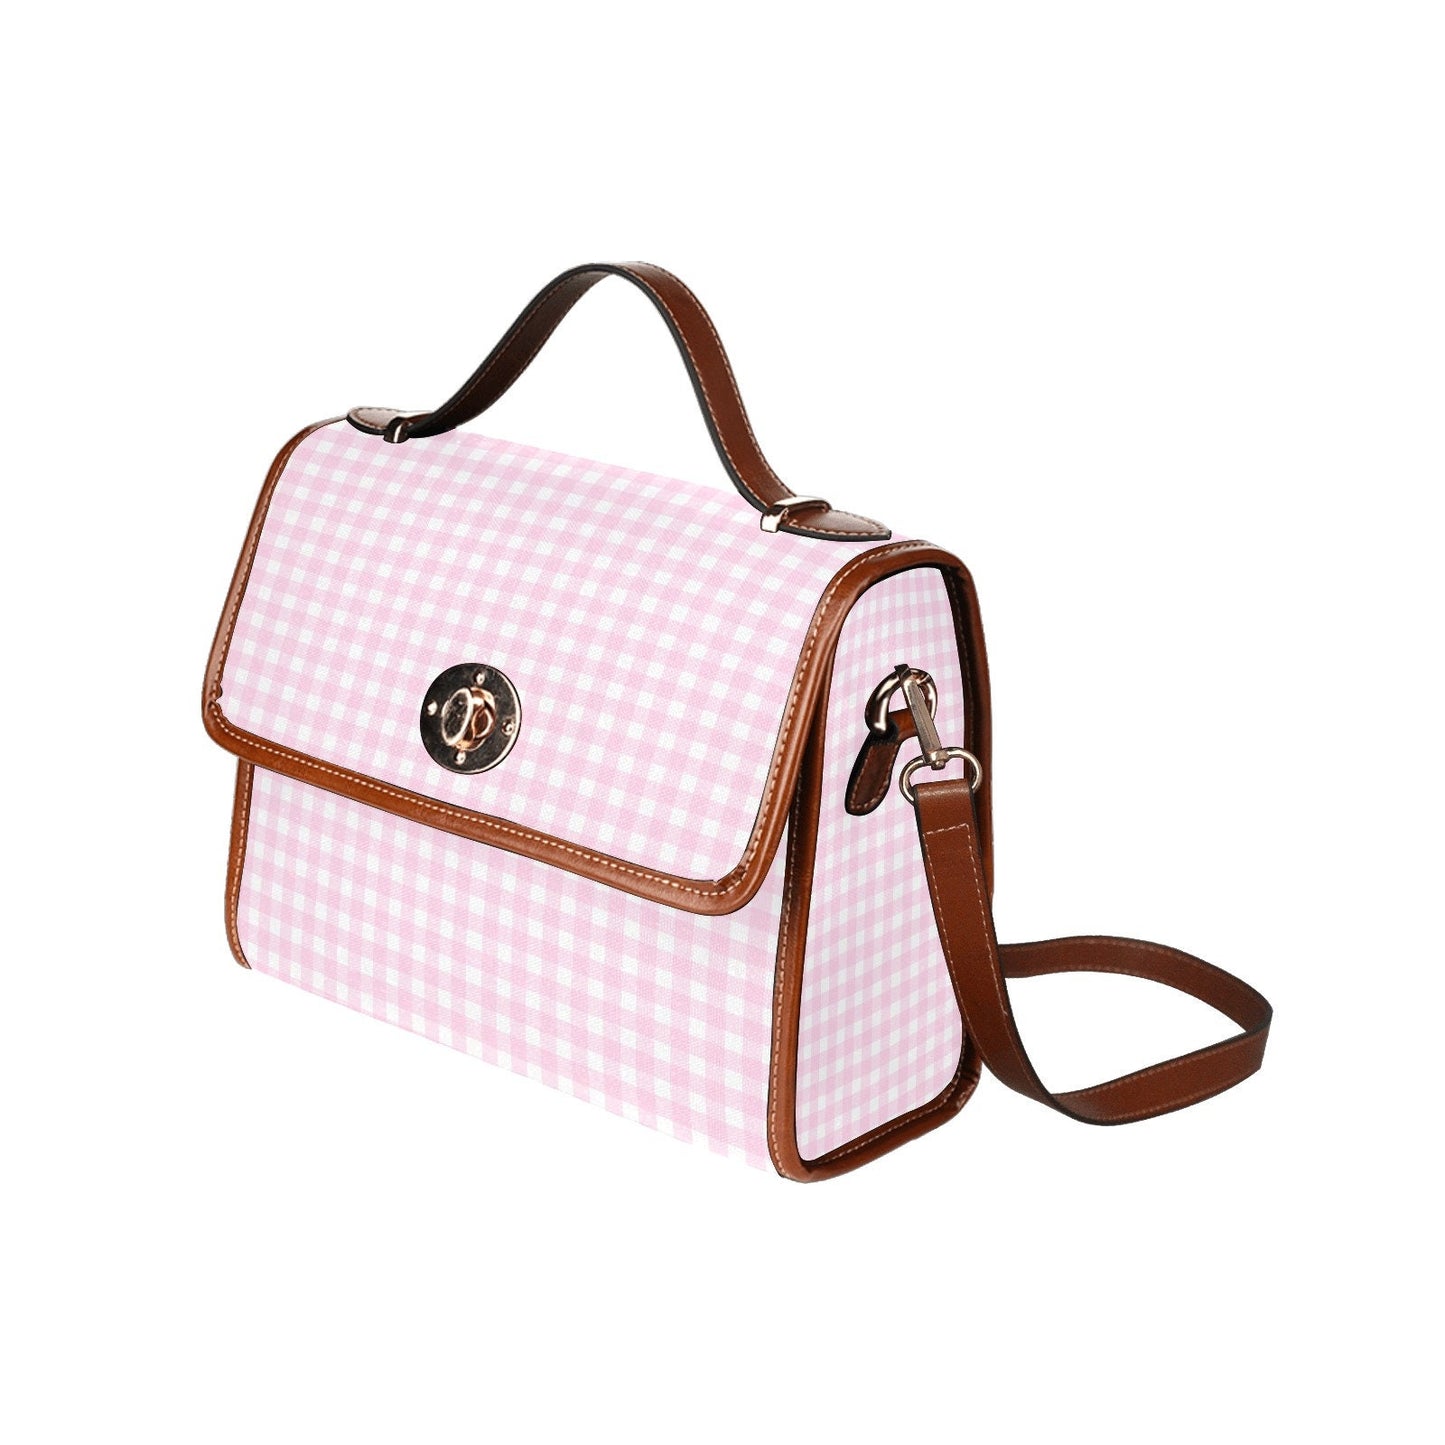 Women's Handbag, Retro Handbag, Pink Gingham Purse, Pink Purse, Women's Purse, Vintage inspired bag, Pinup style, Pink Gingham handbag